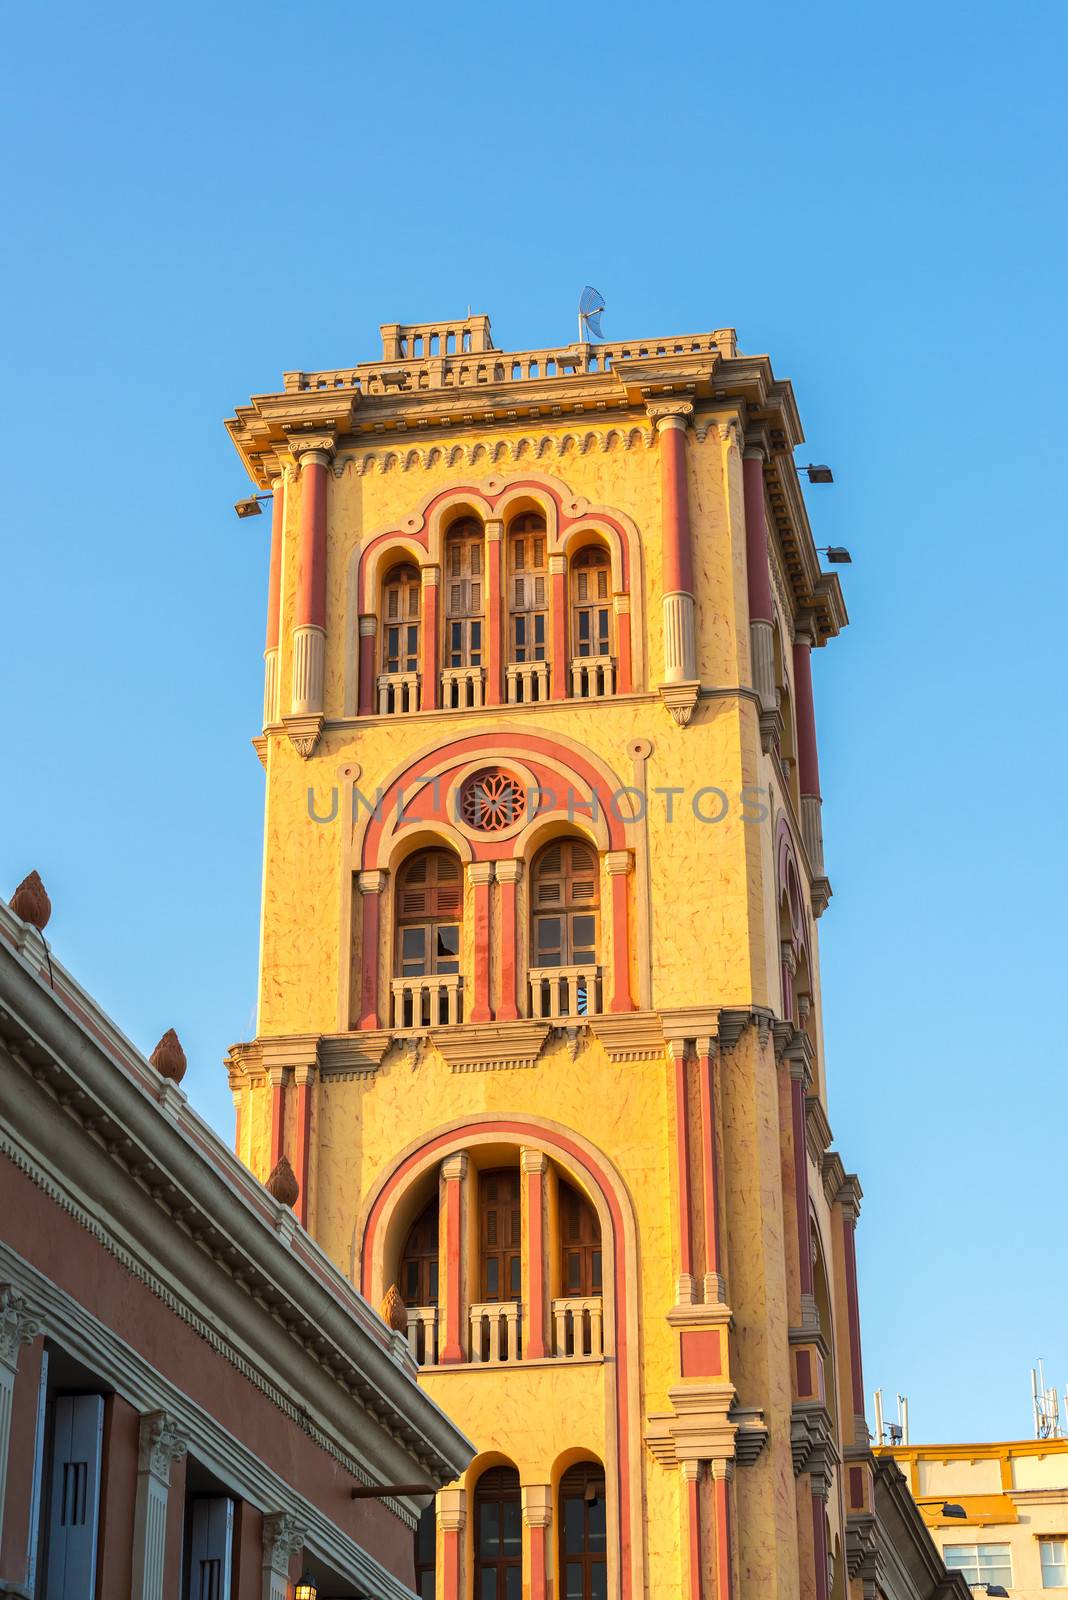 Cartagena Public University Tower by jkraft5